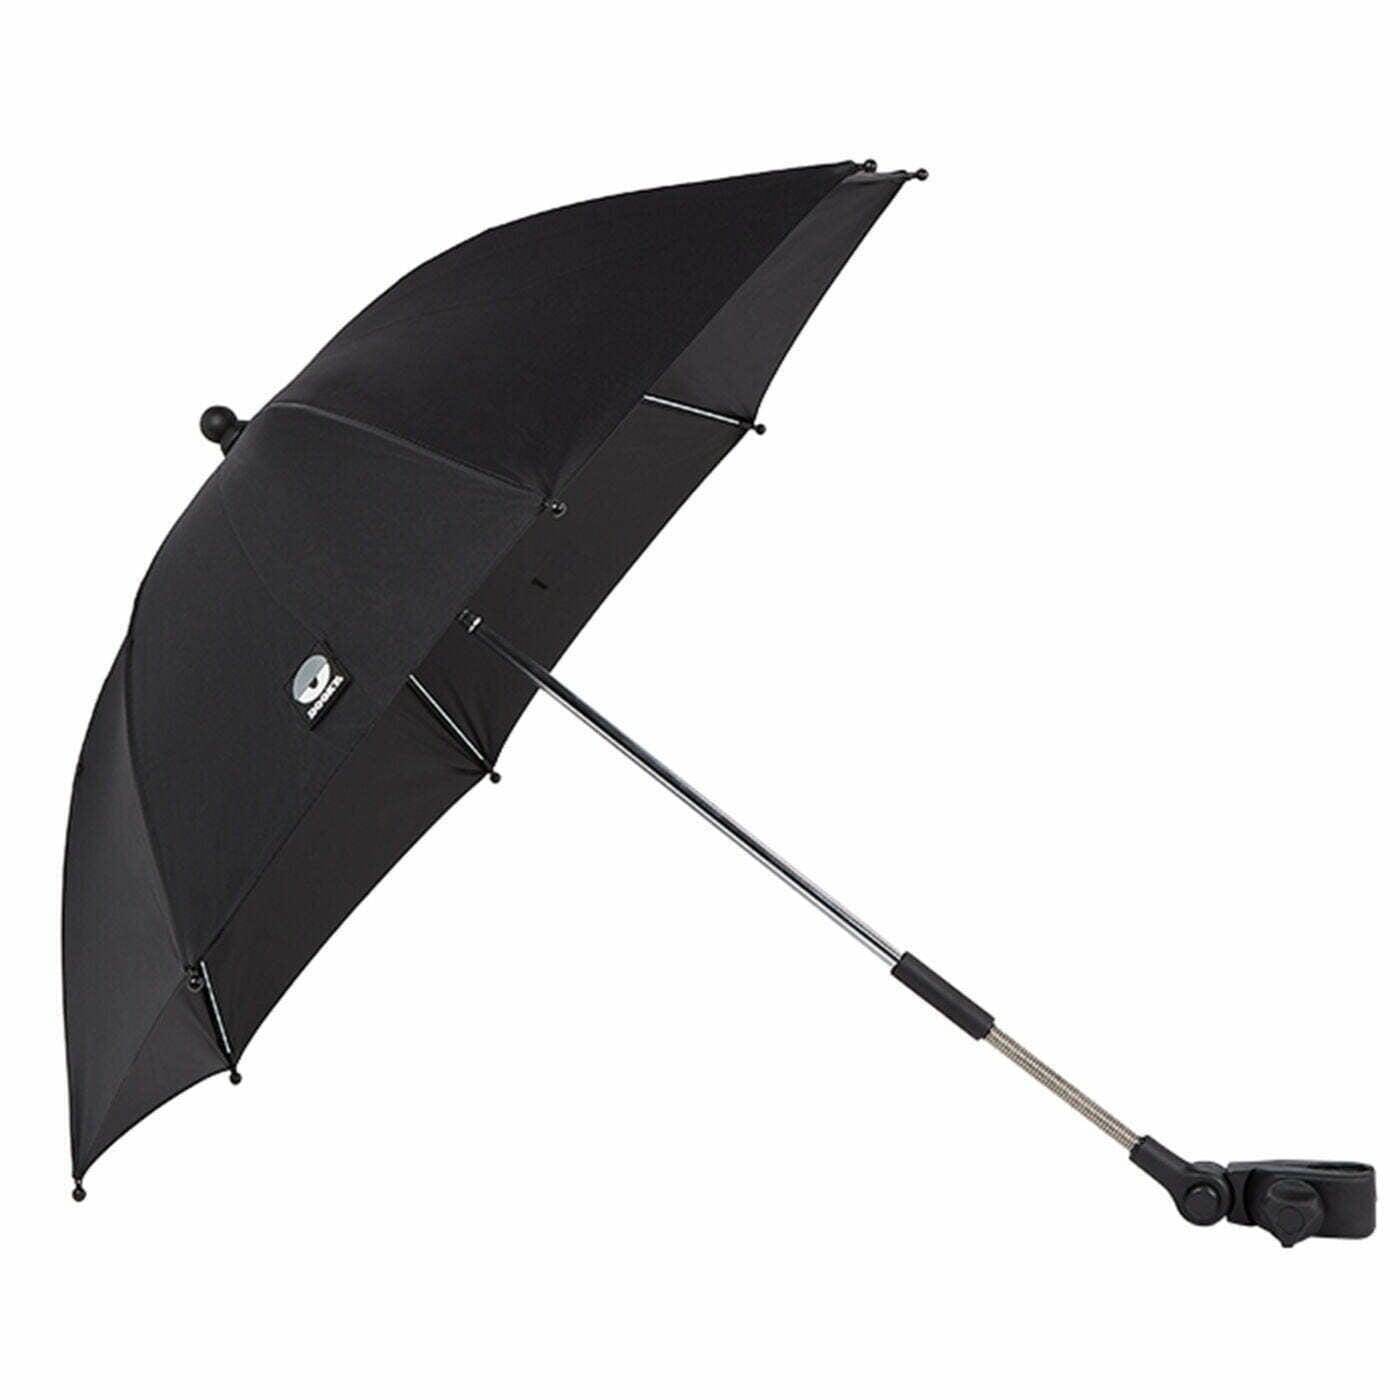 Hippychick sun canopies & parasols Dooky Stroller Parasol Black